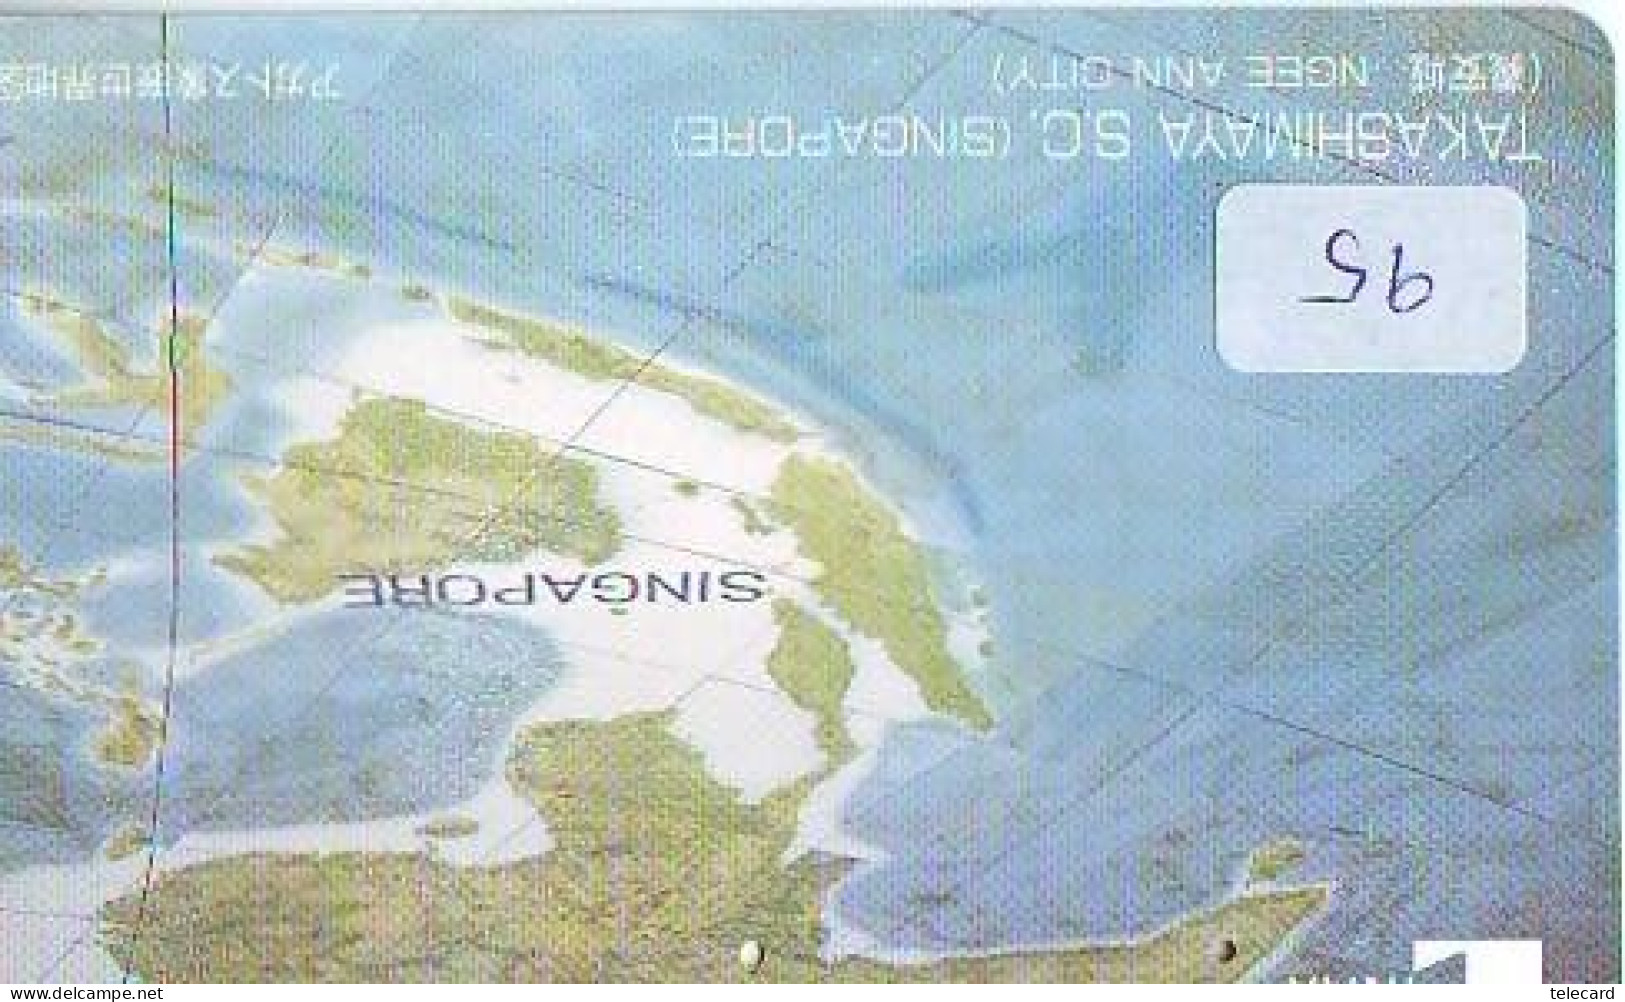 Telecarte SINGAPORE Reliée (95) - Telefonkarte SINGAPORE Verbunden - Phonecard SINGAPORE Related - Japan - Landscapes